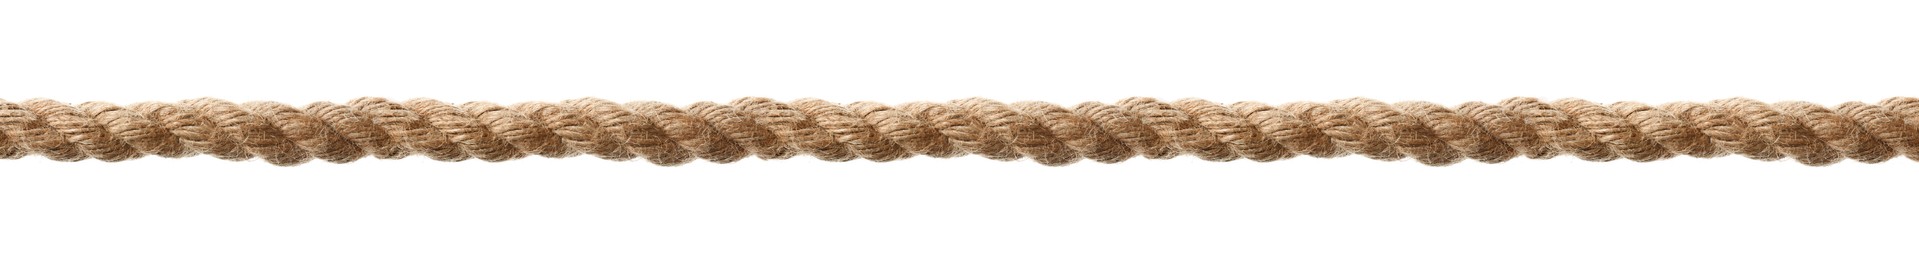 Image of Long durable hemp rope on white background